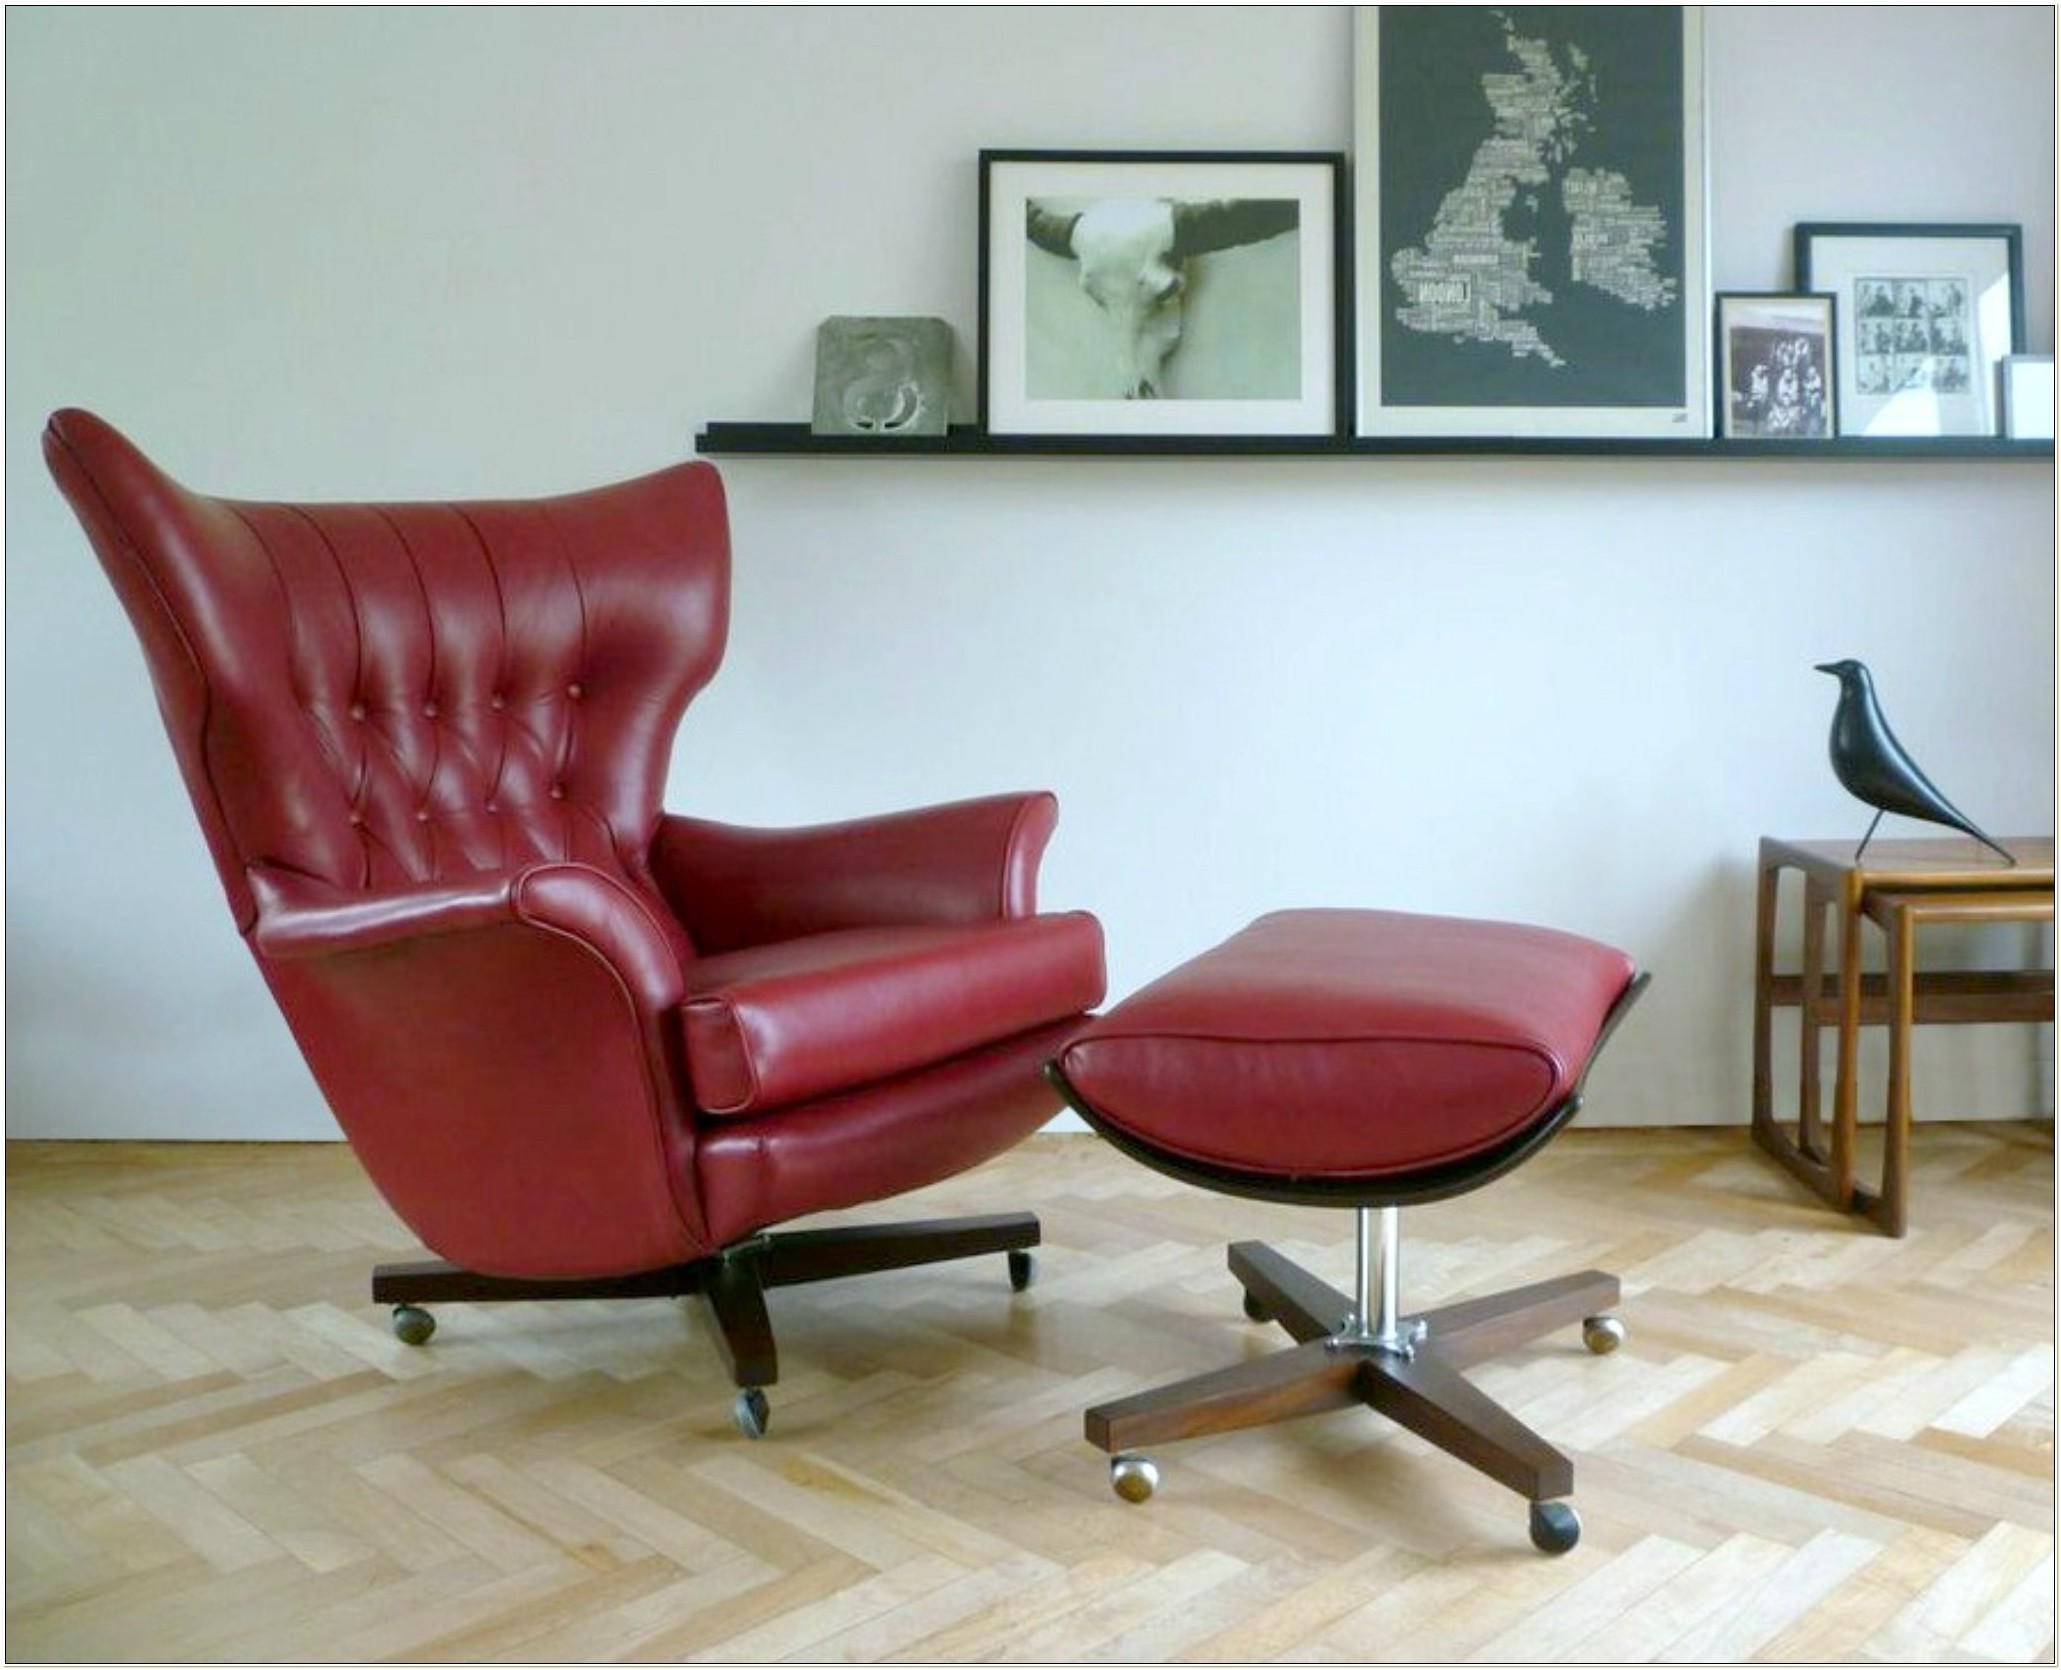 ergonomic living room furniture usa